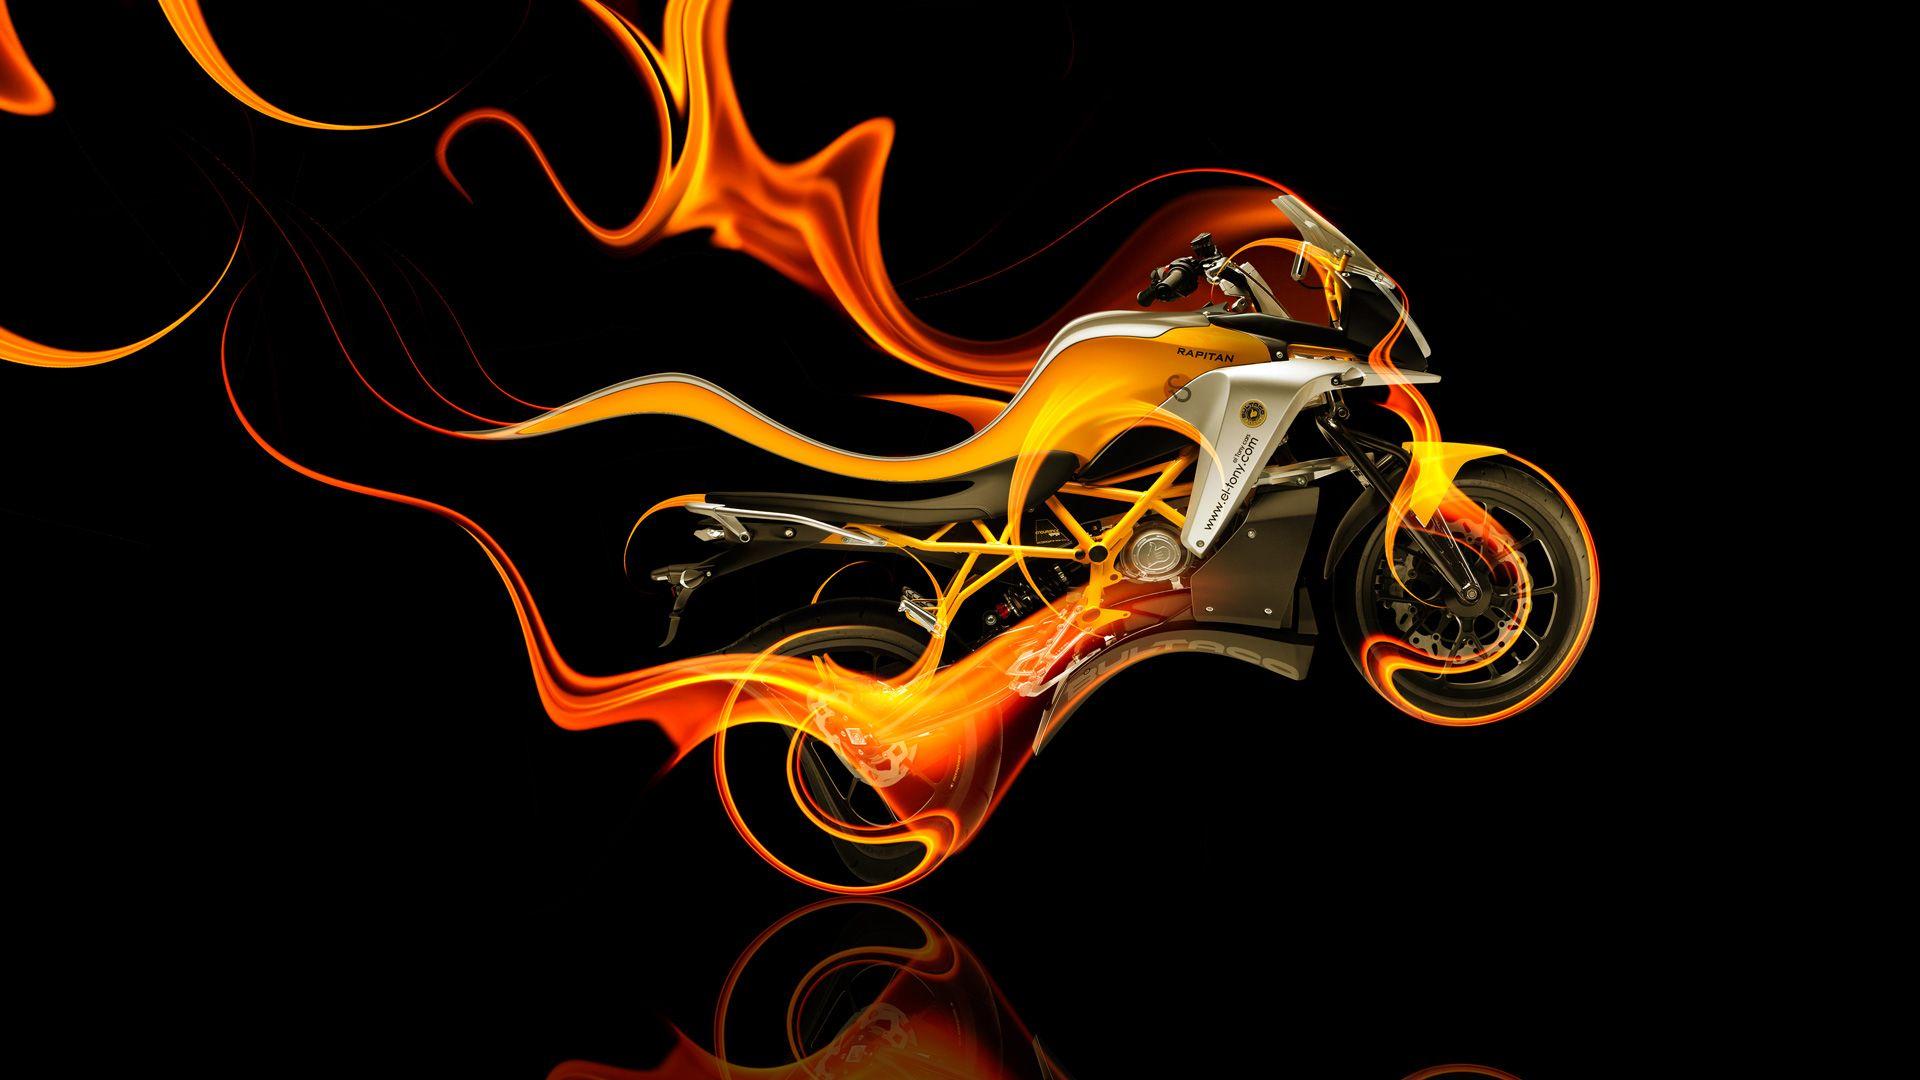 Moto Rapitan Side Fire Abstract Bike 2014